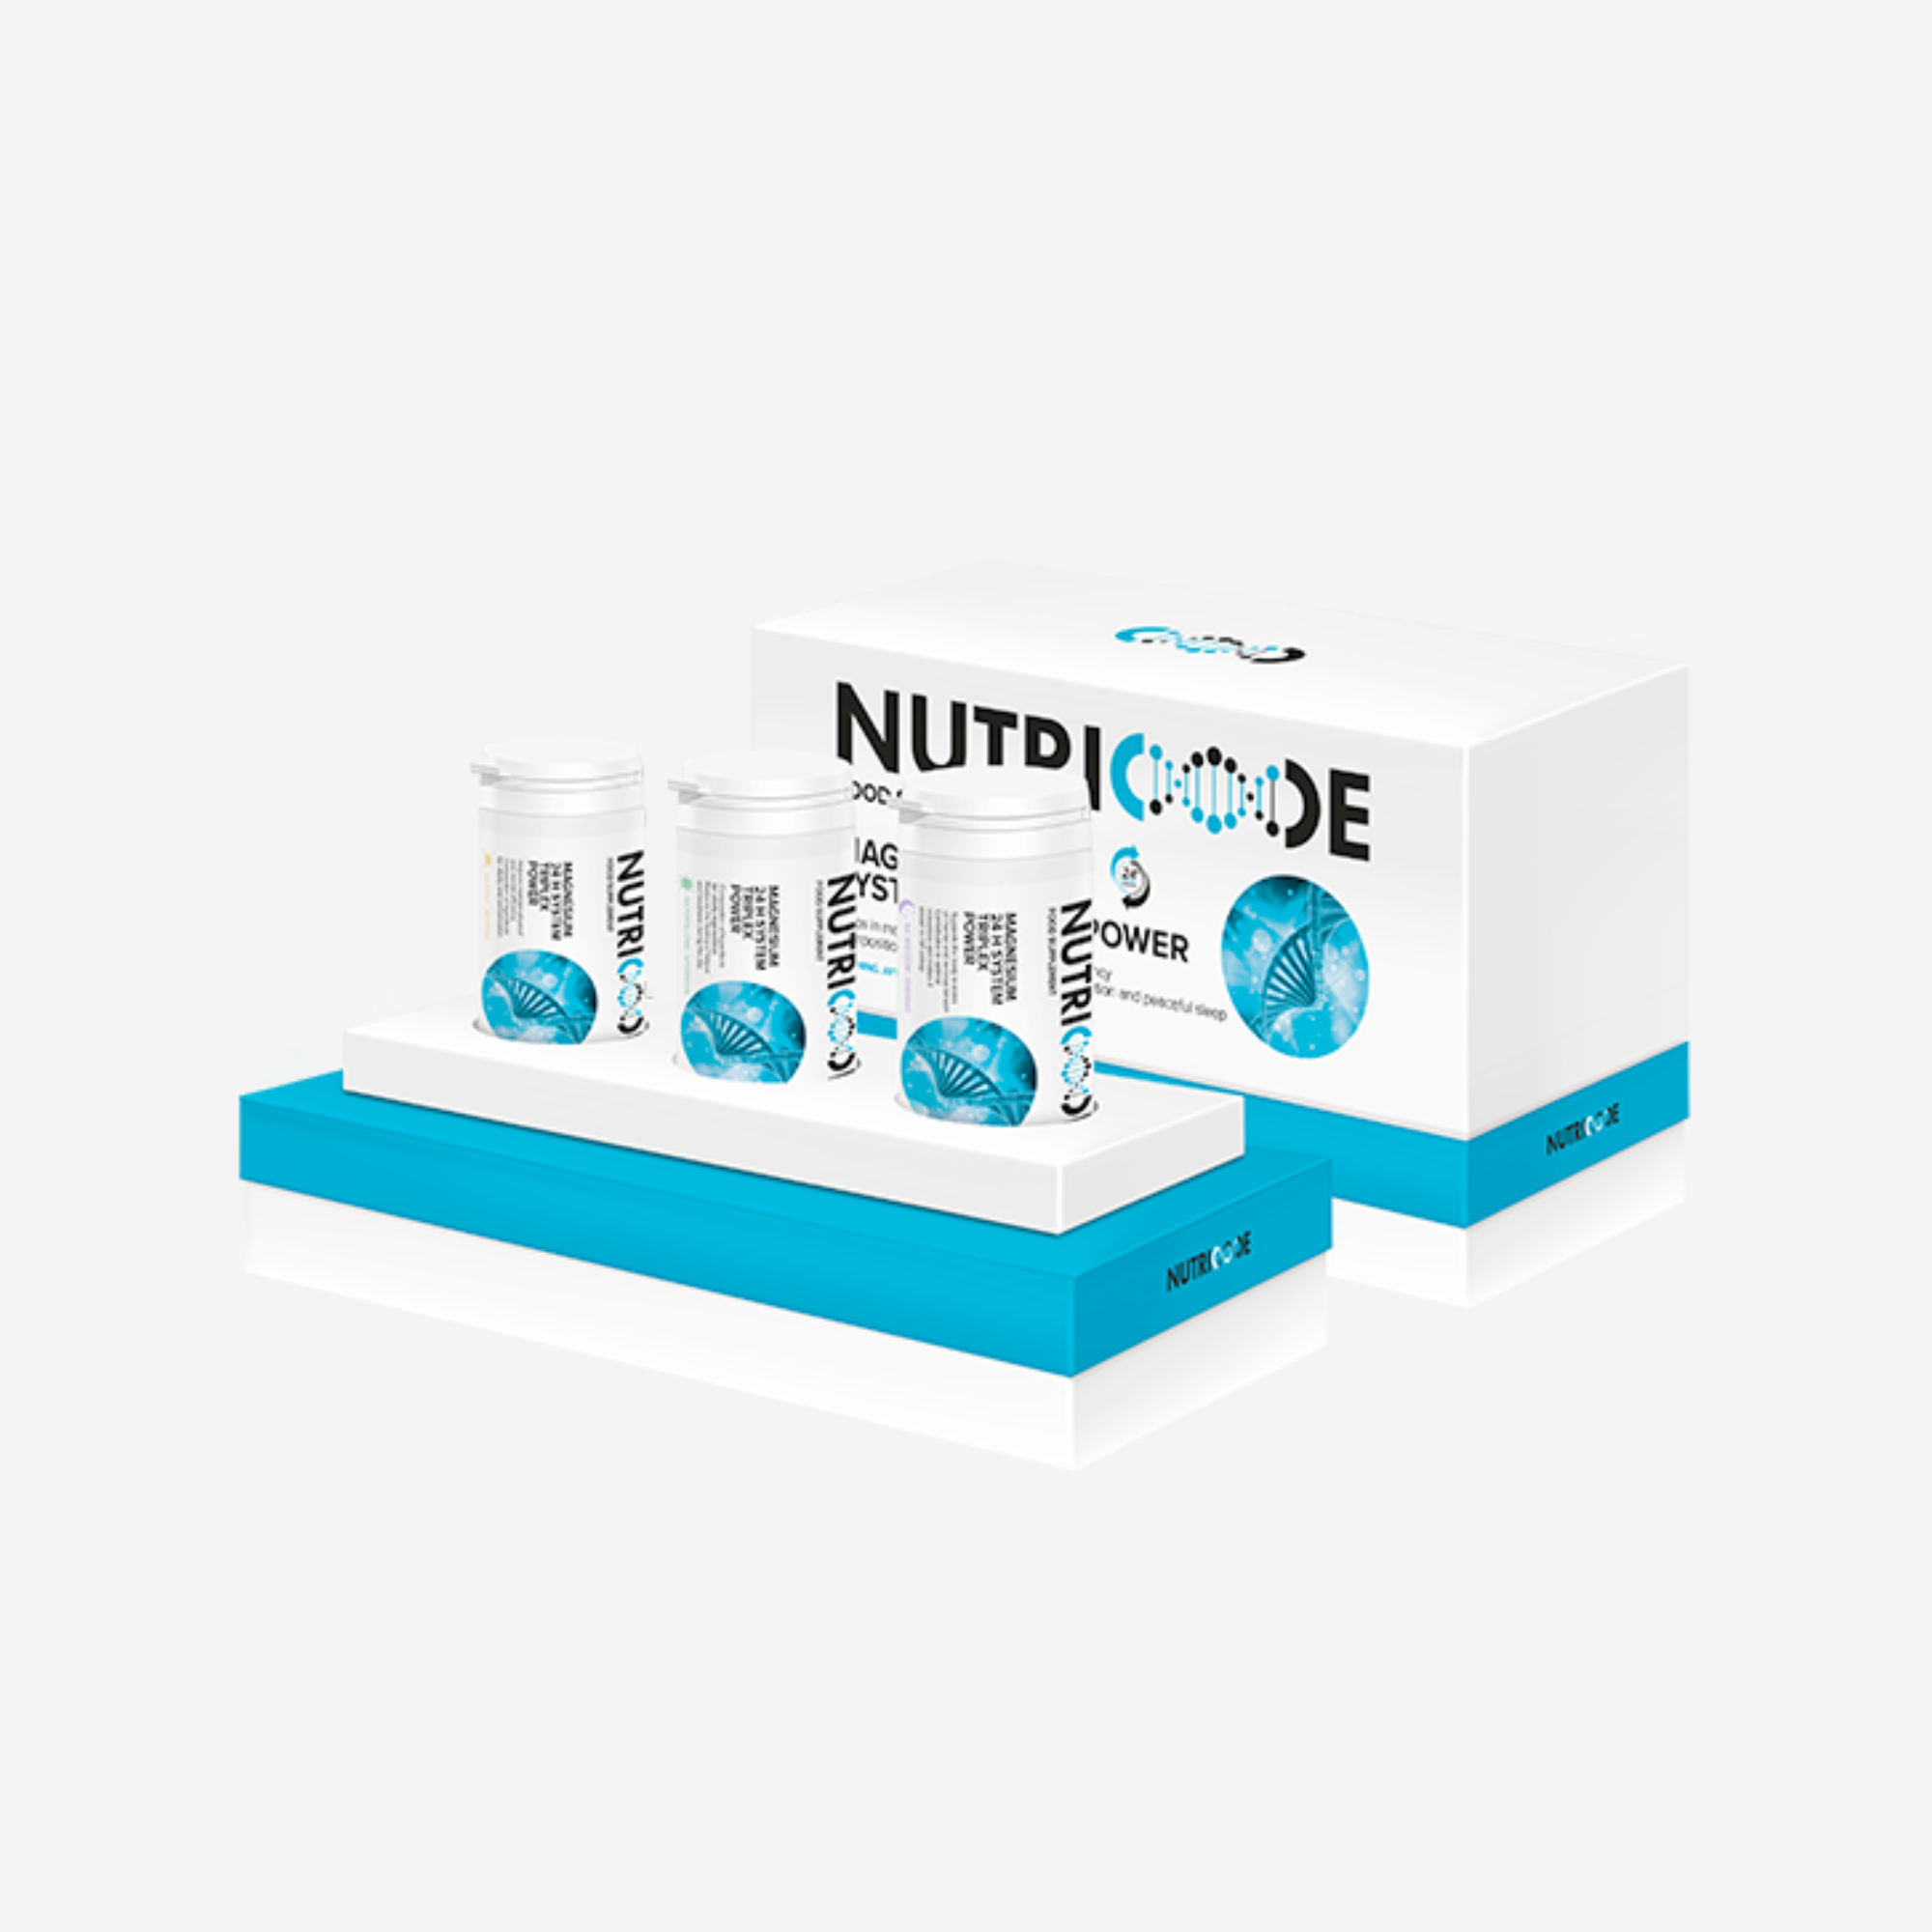 Nutricode Magnesium 24H System Triplex Power